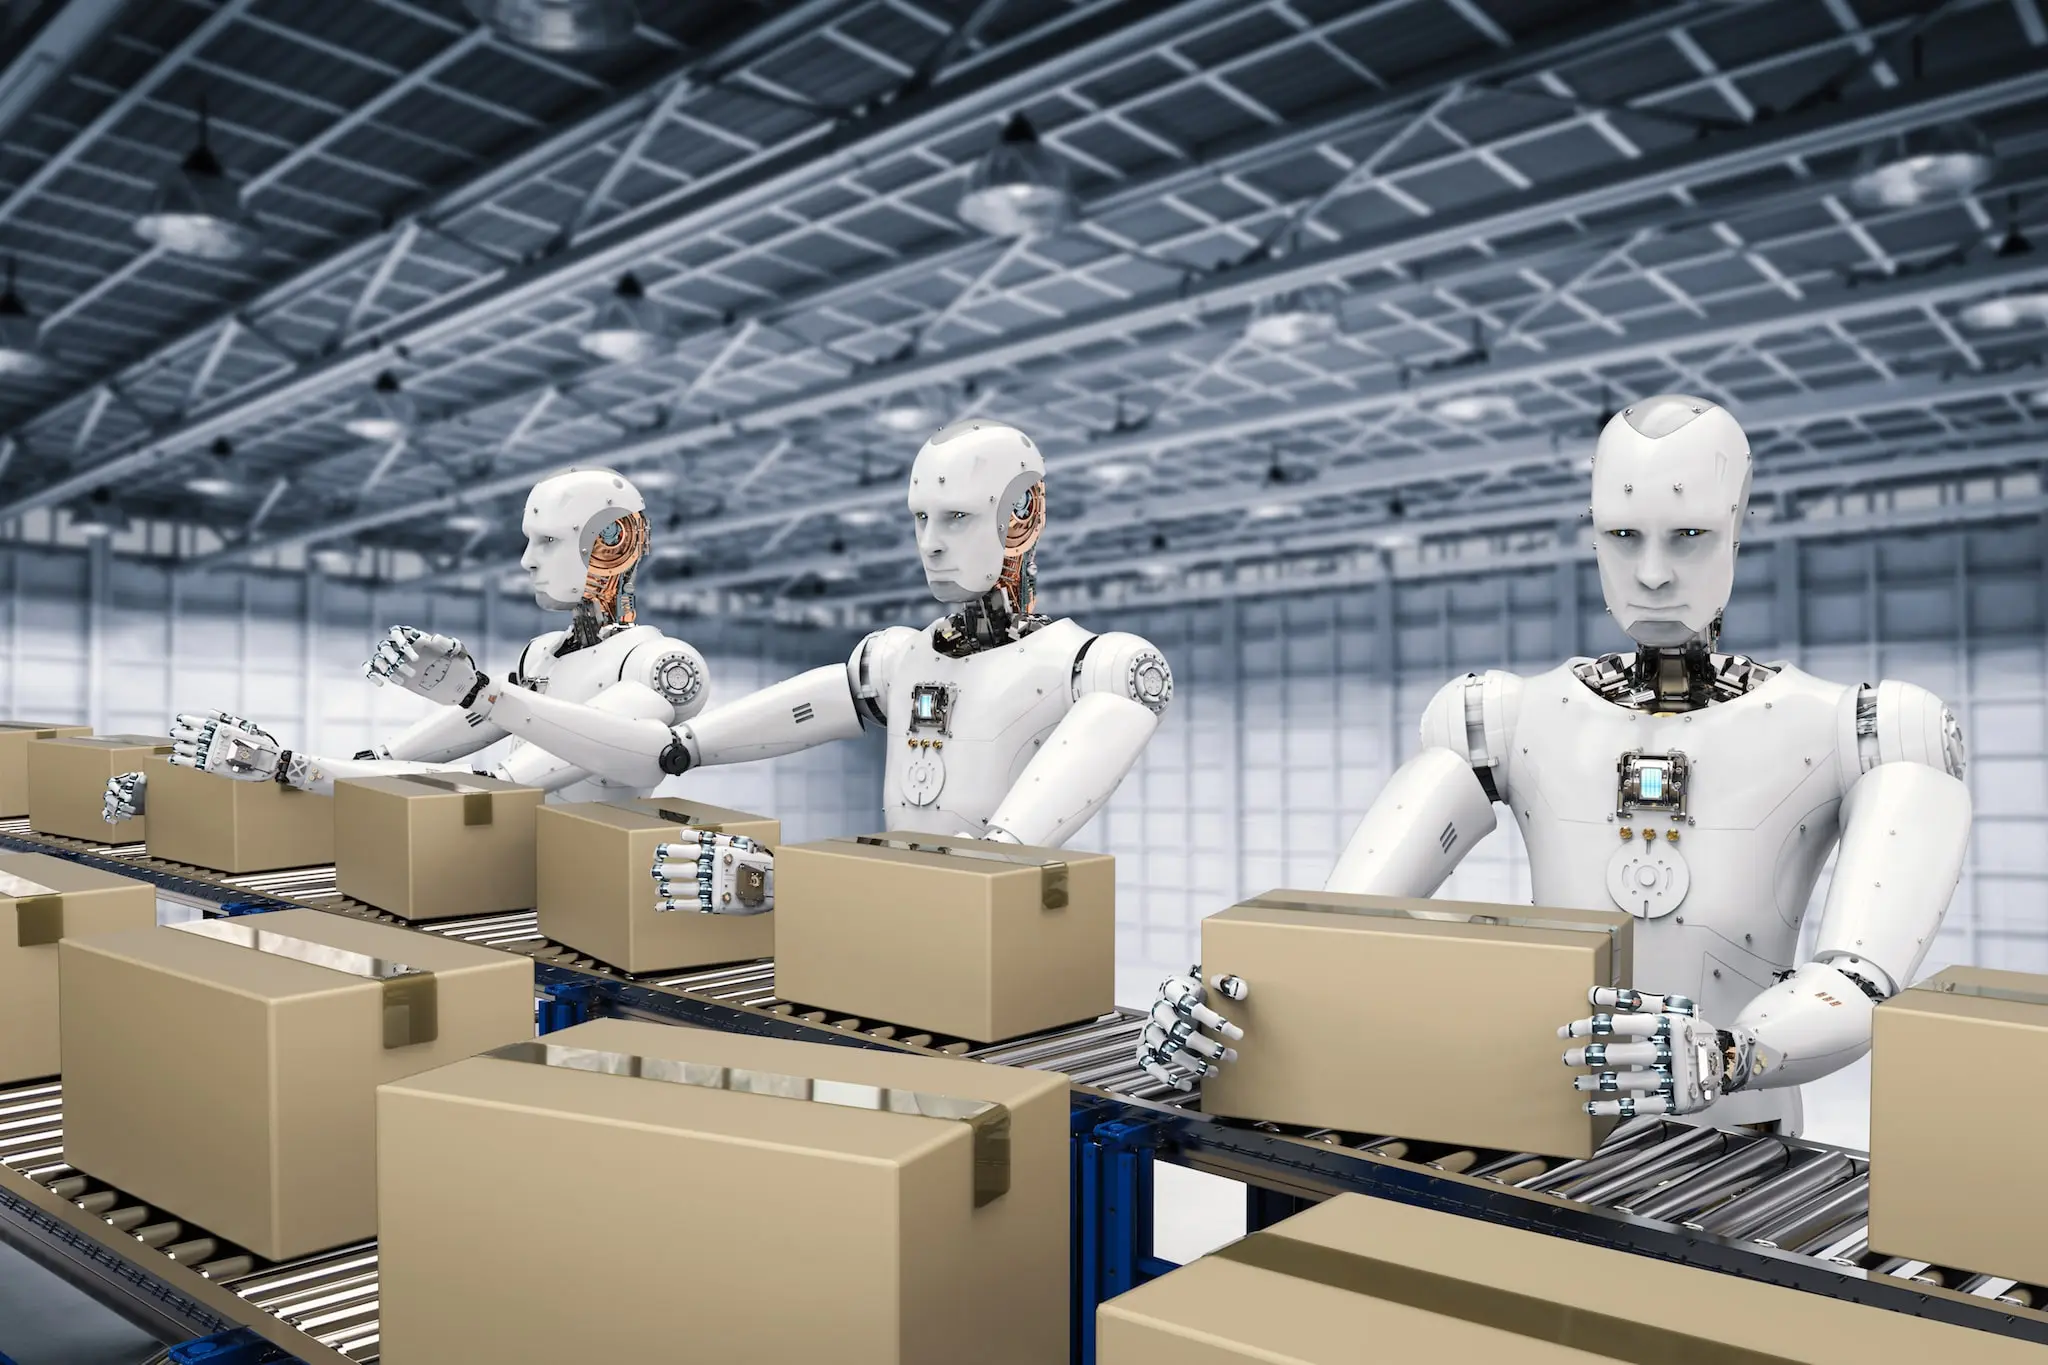 robots replacing humans